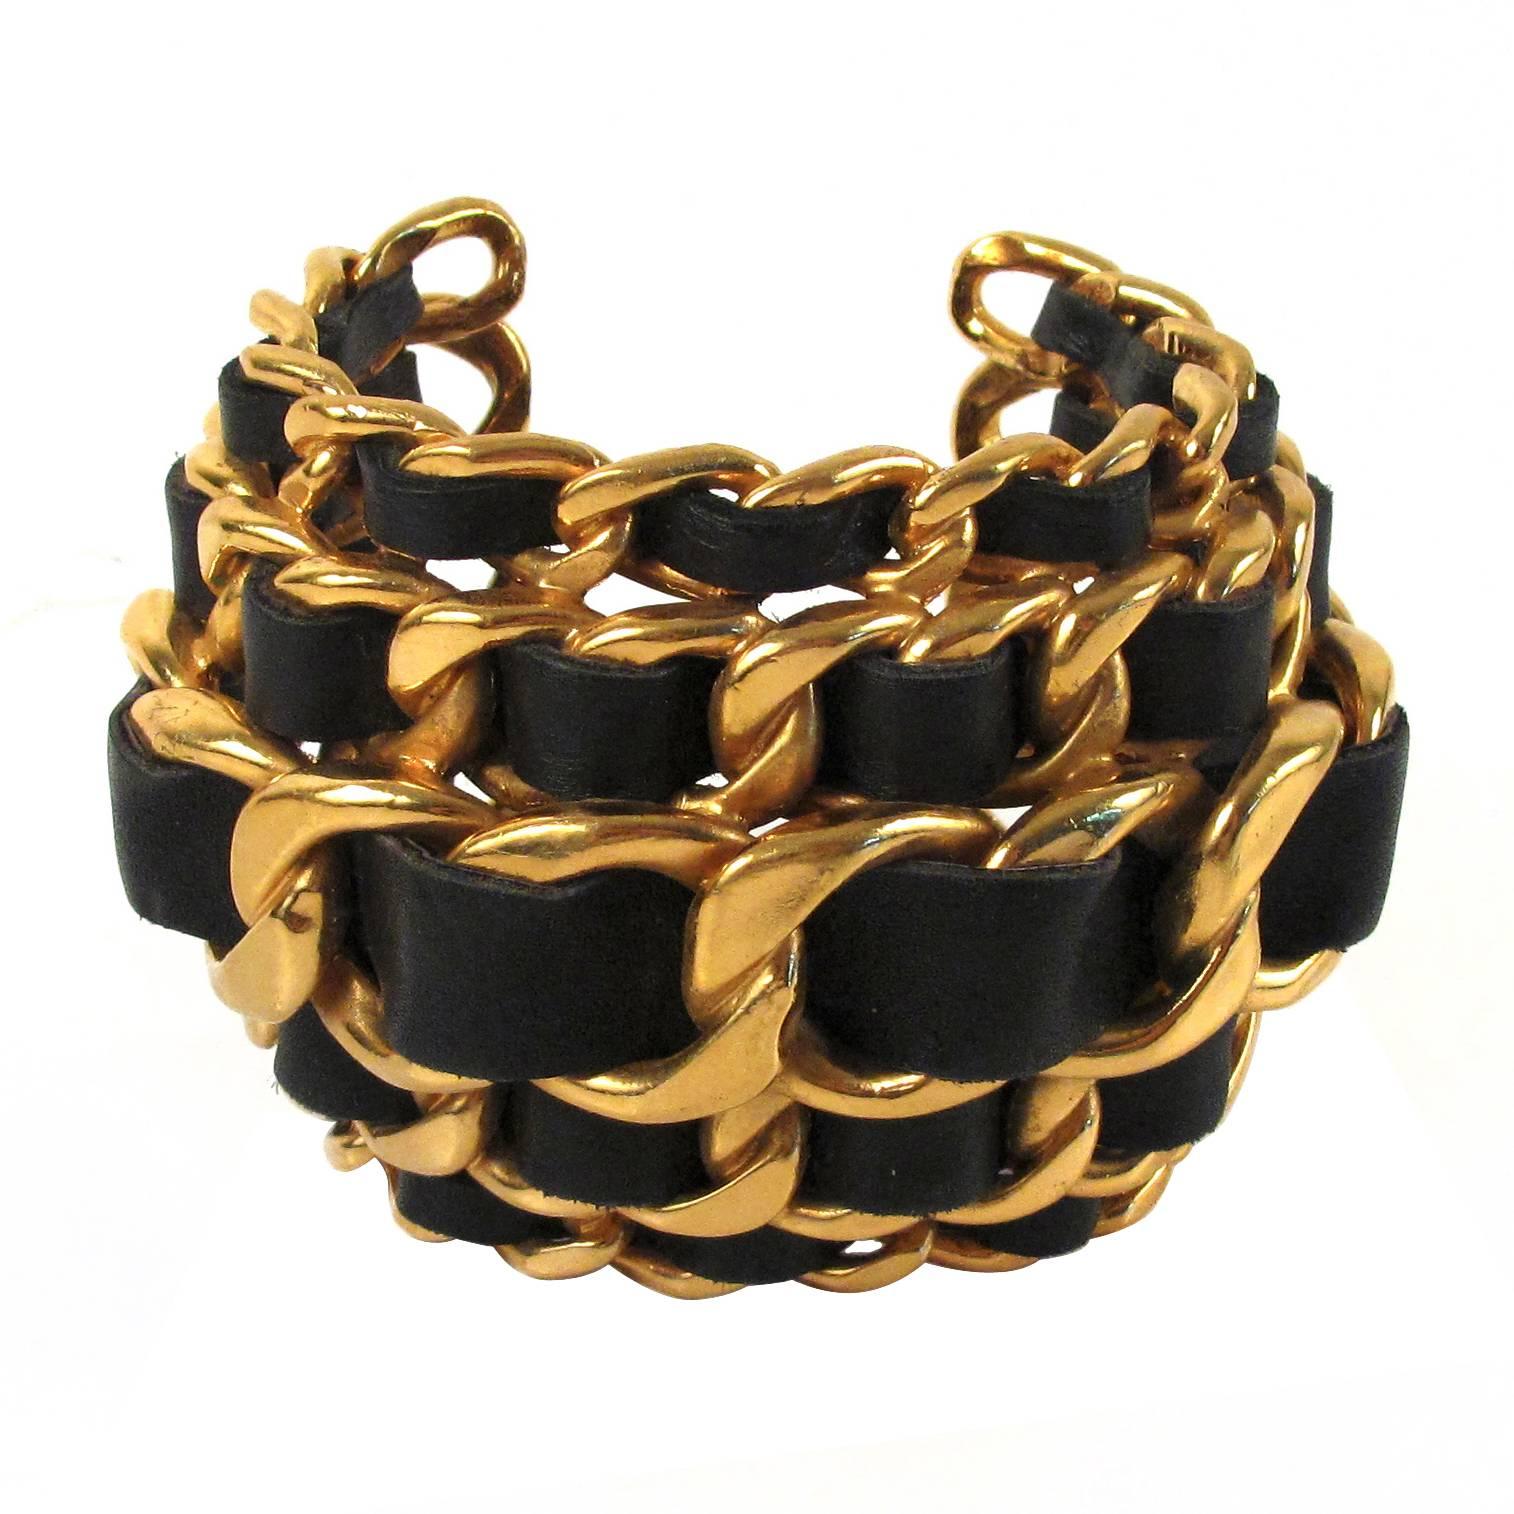 Chanel Cuff - XL Wide Chain Bracelet Vintage Black Gold Leather Bangle CC Charm